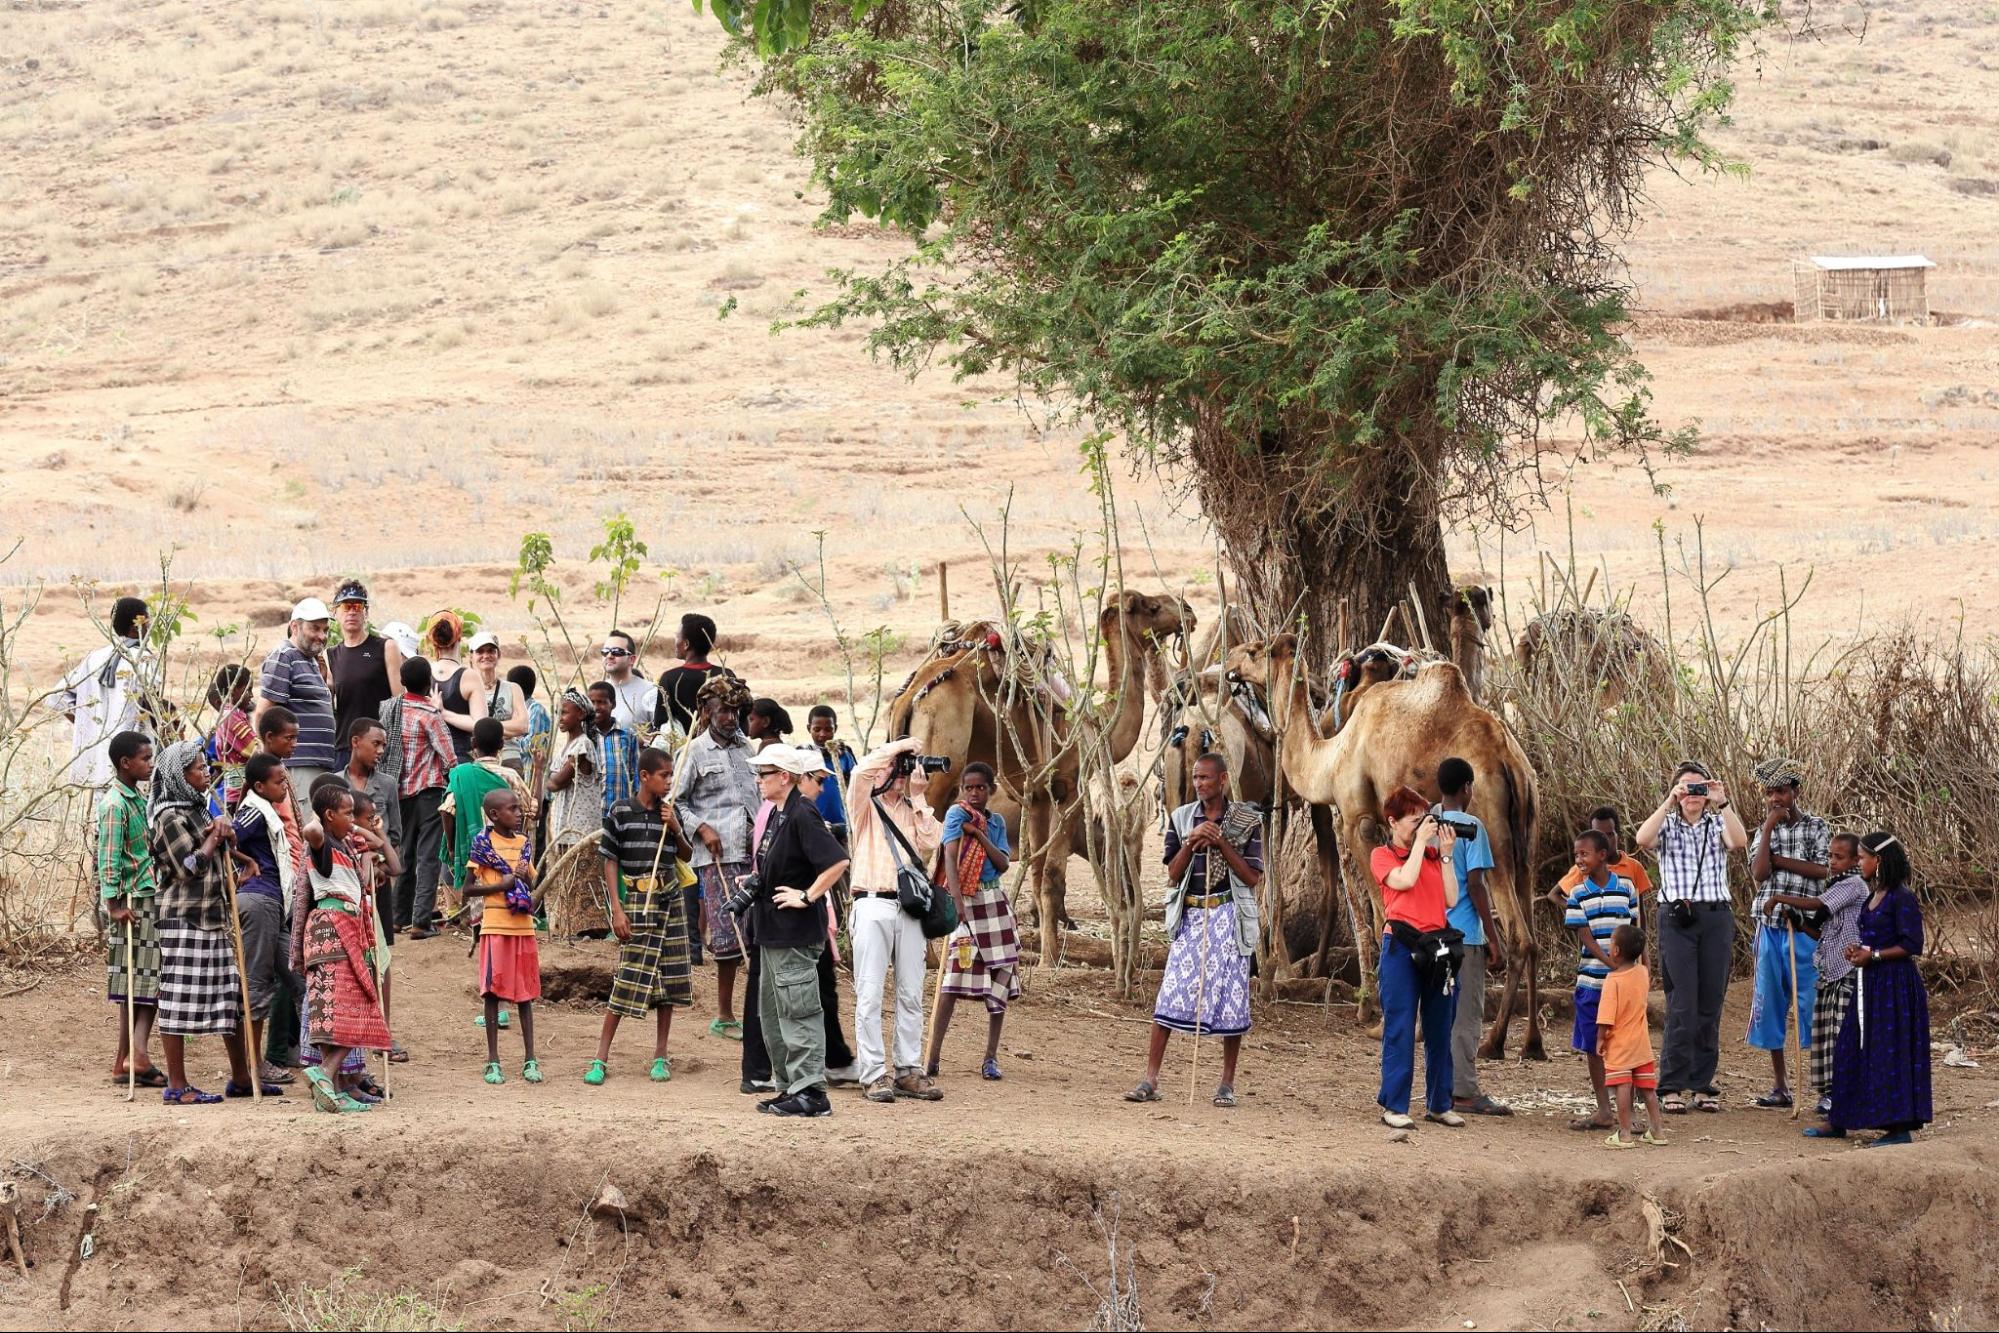 Senbete-Oromia zone-Amhara region-Ethiopia.